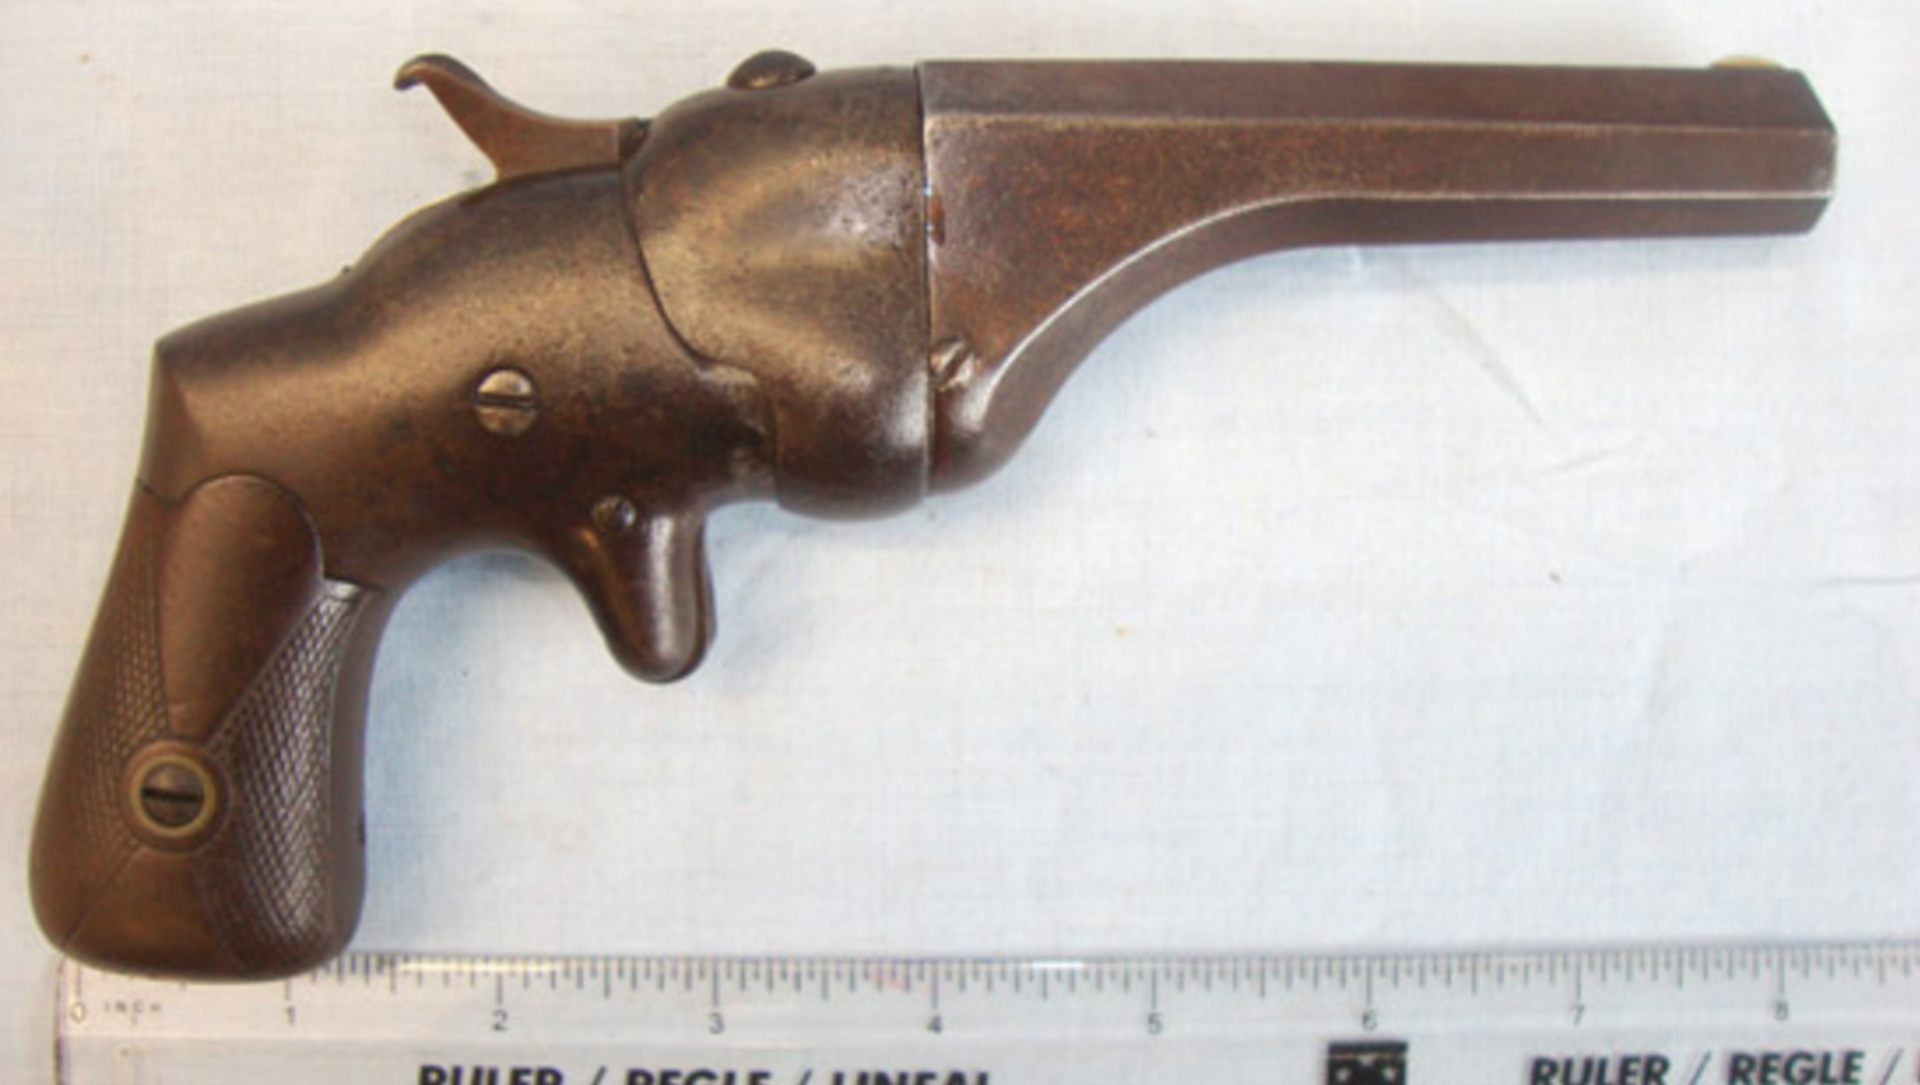 RARE,1865-1868 American Civil War Era, Connecticut Arms & Manufacturing Co,Bulldog Derringer Pistol